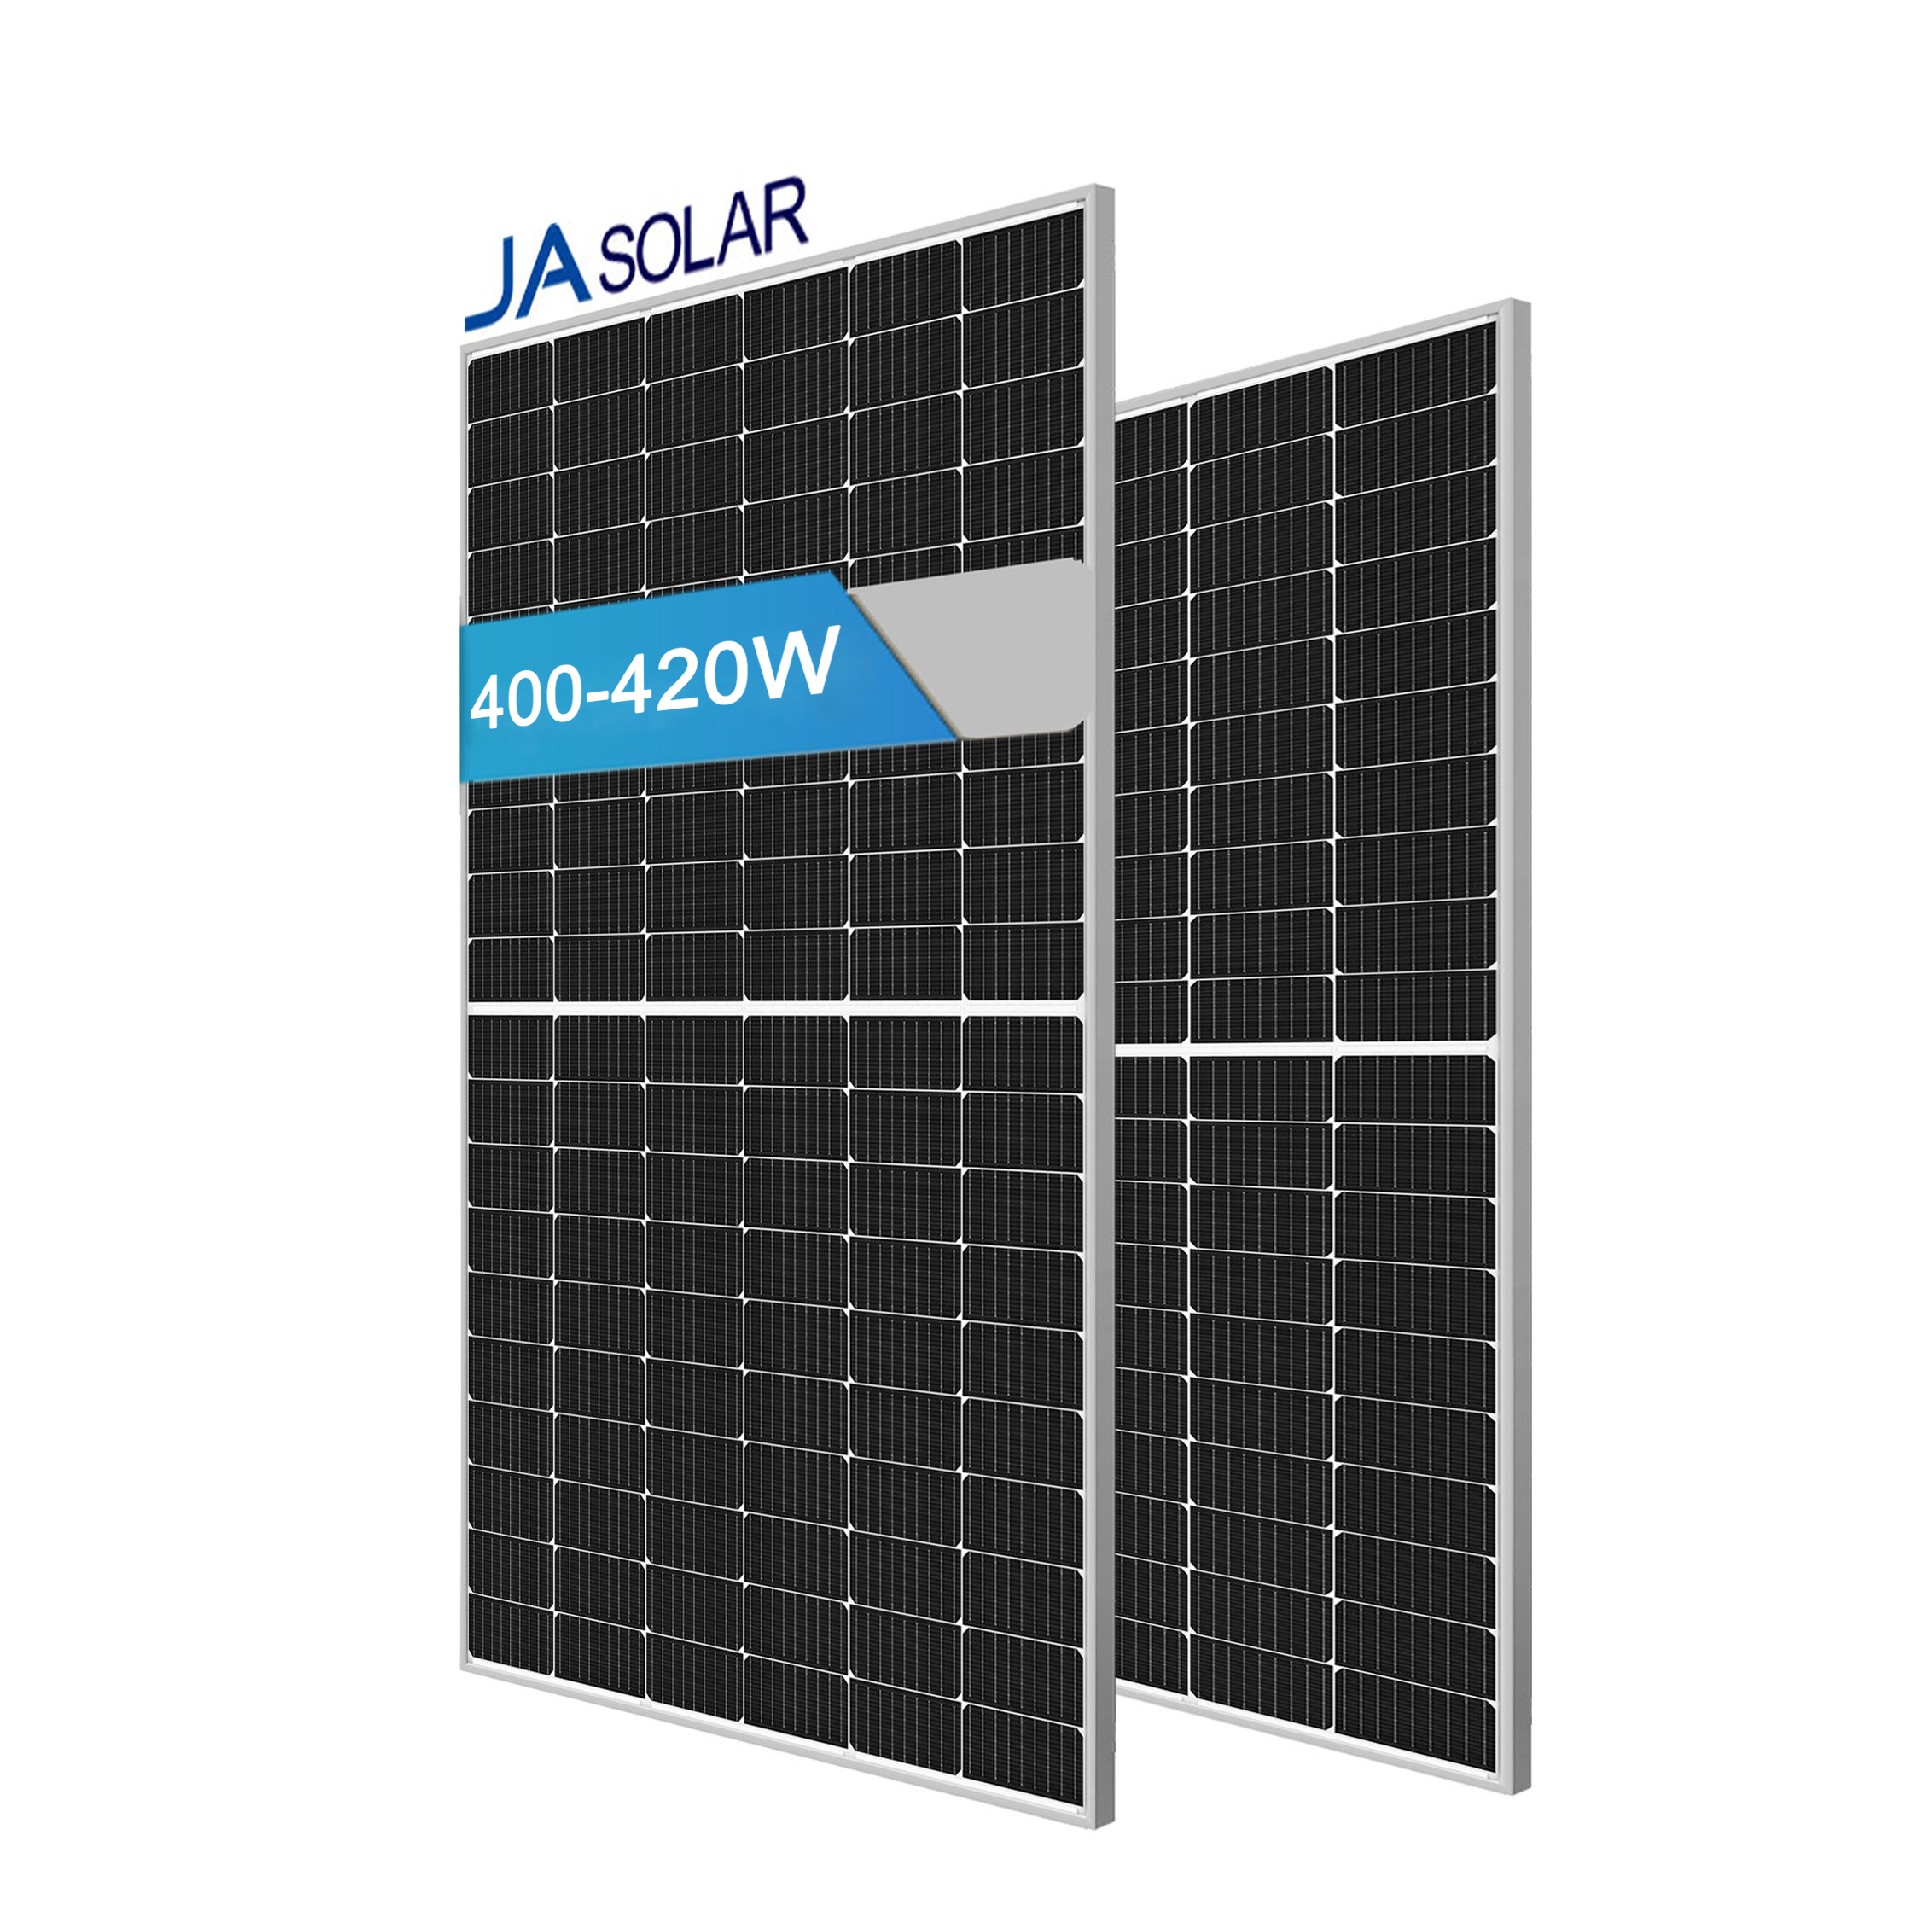 JAsolar 400-420W Solar Panel